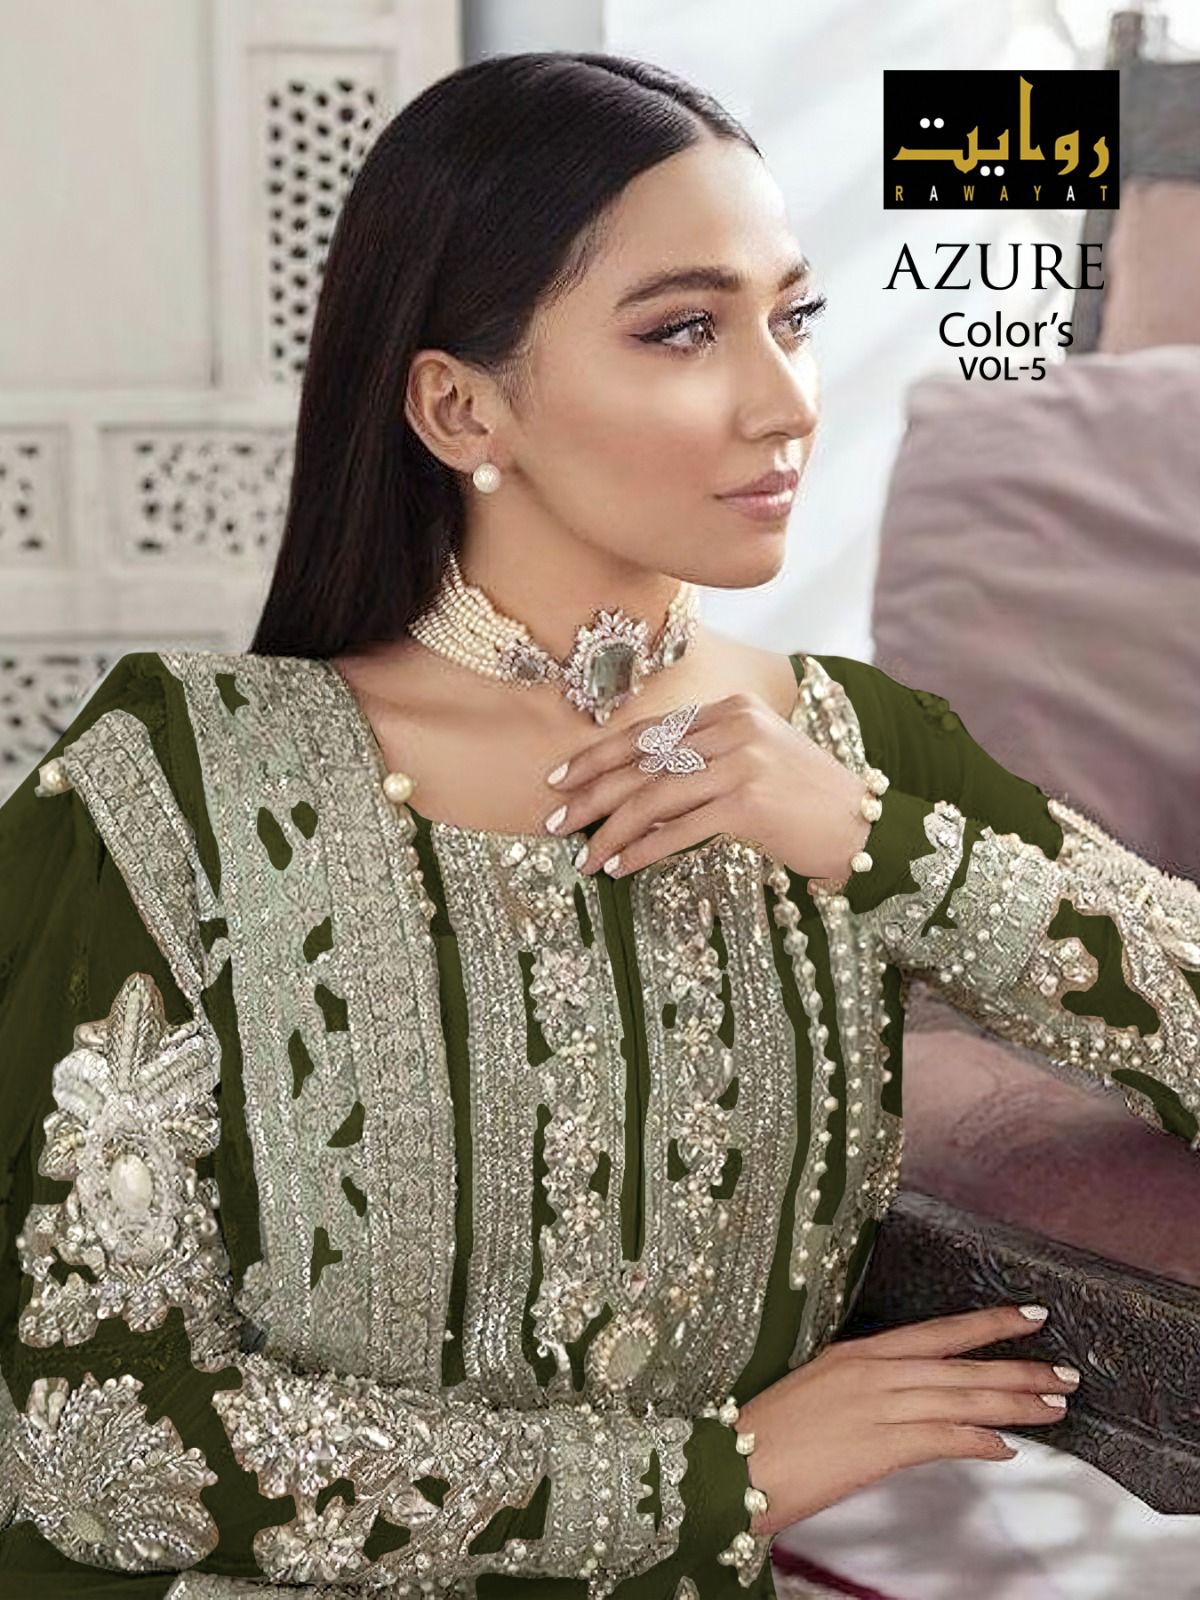 Azure Colors Vol 5 Rawayat Georgette Pakistani Salwar Suits